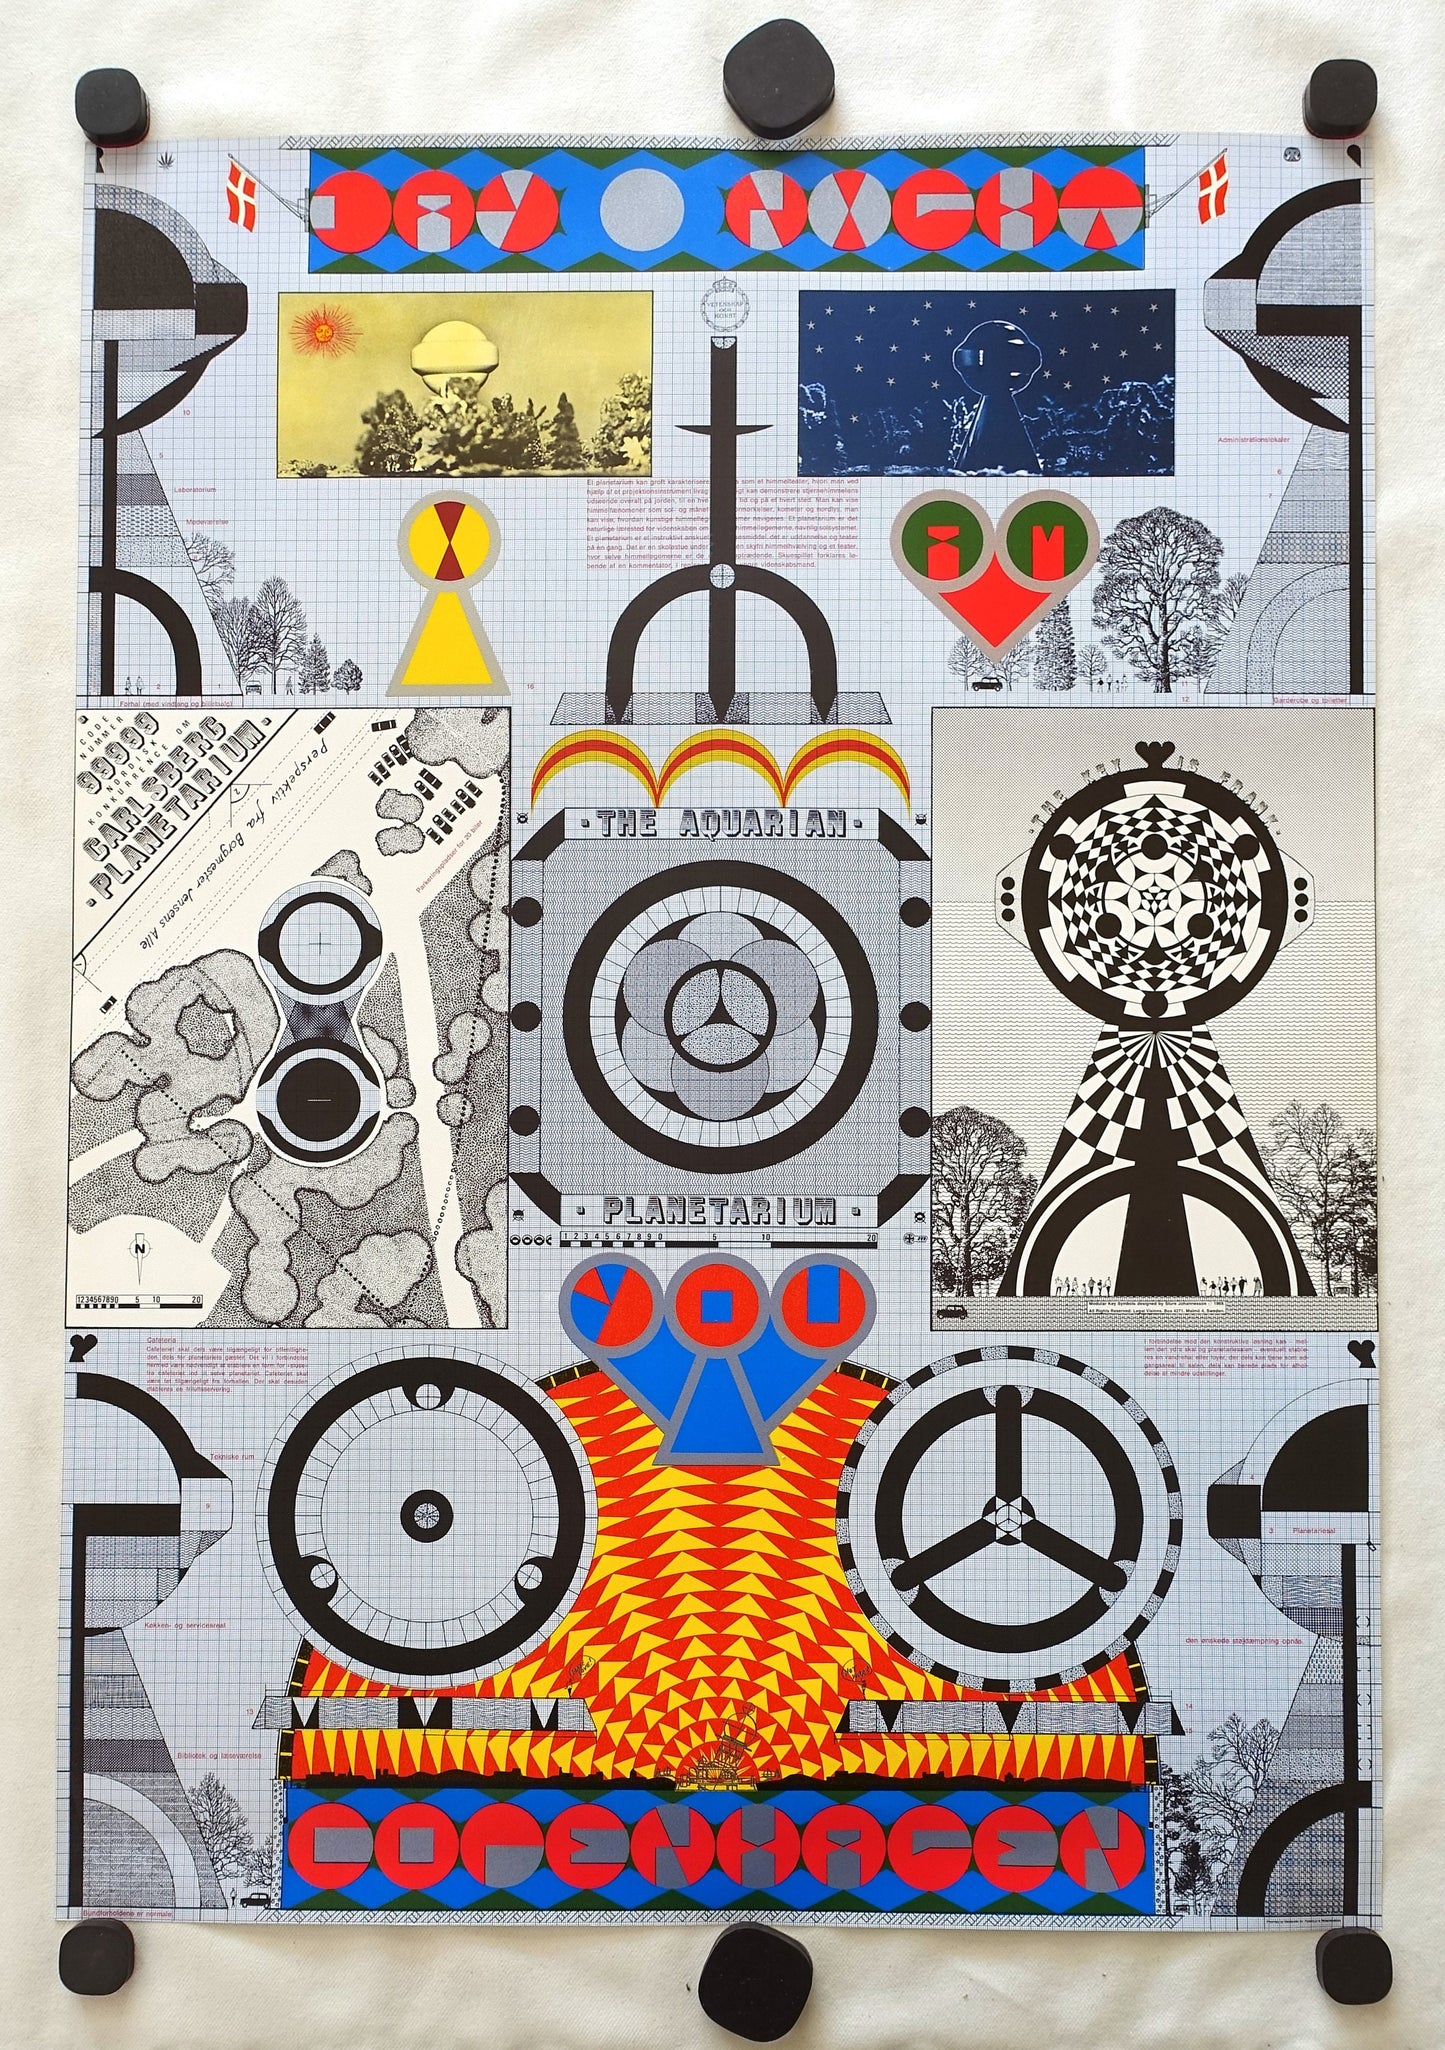 1969 The Aquarian Planetarium by Sture Johannesson - Original Vintage Poster